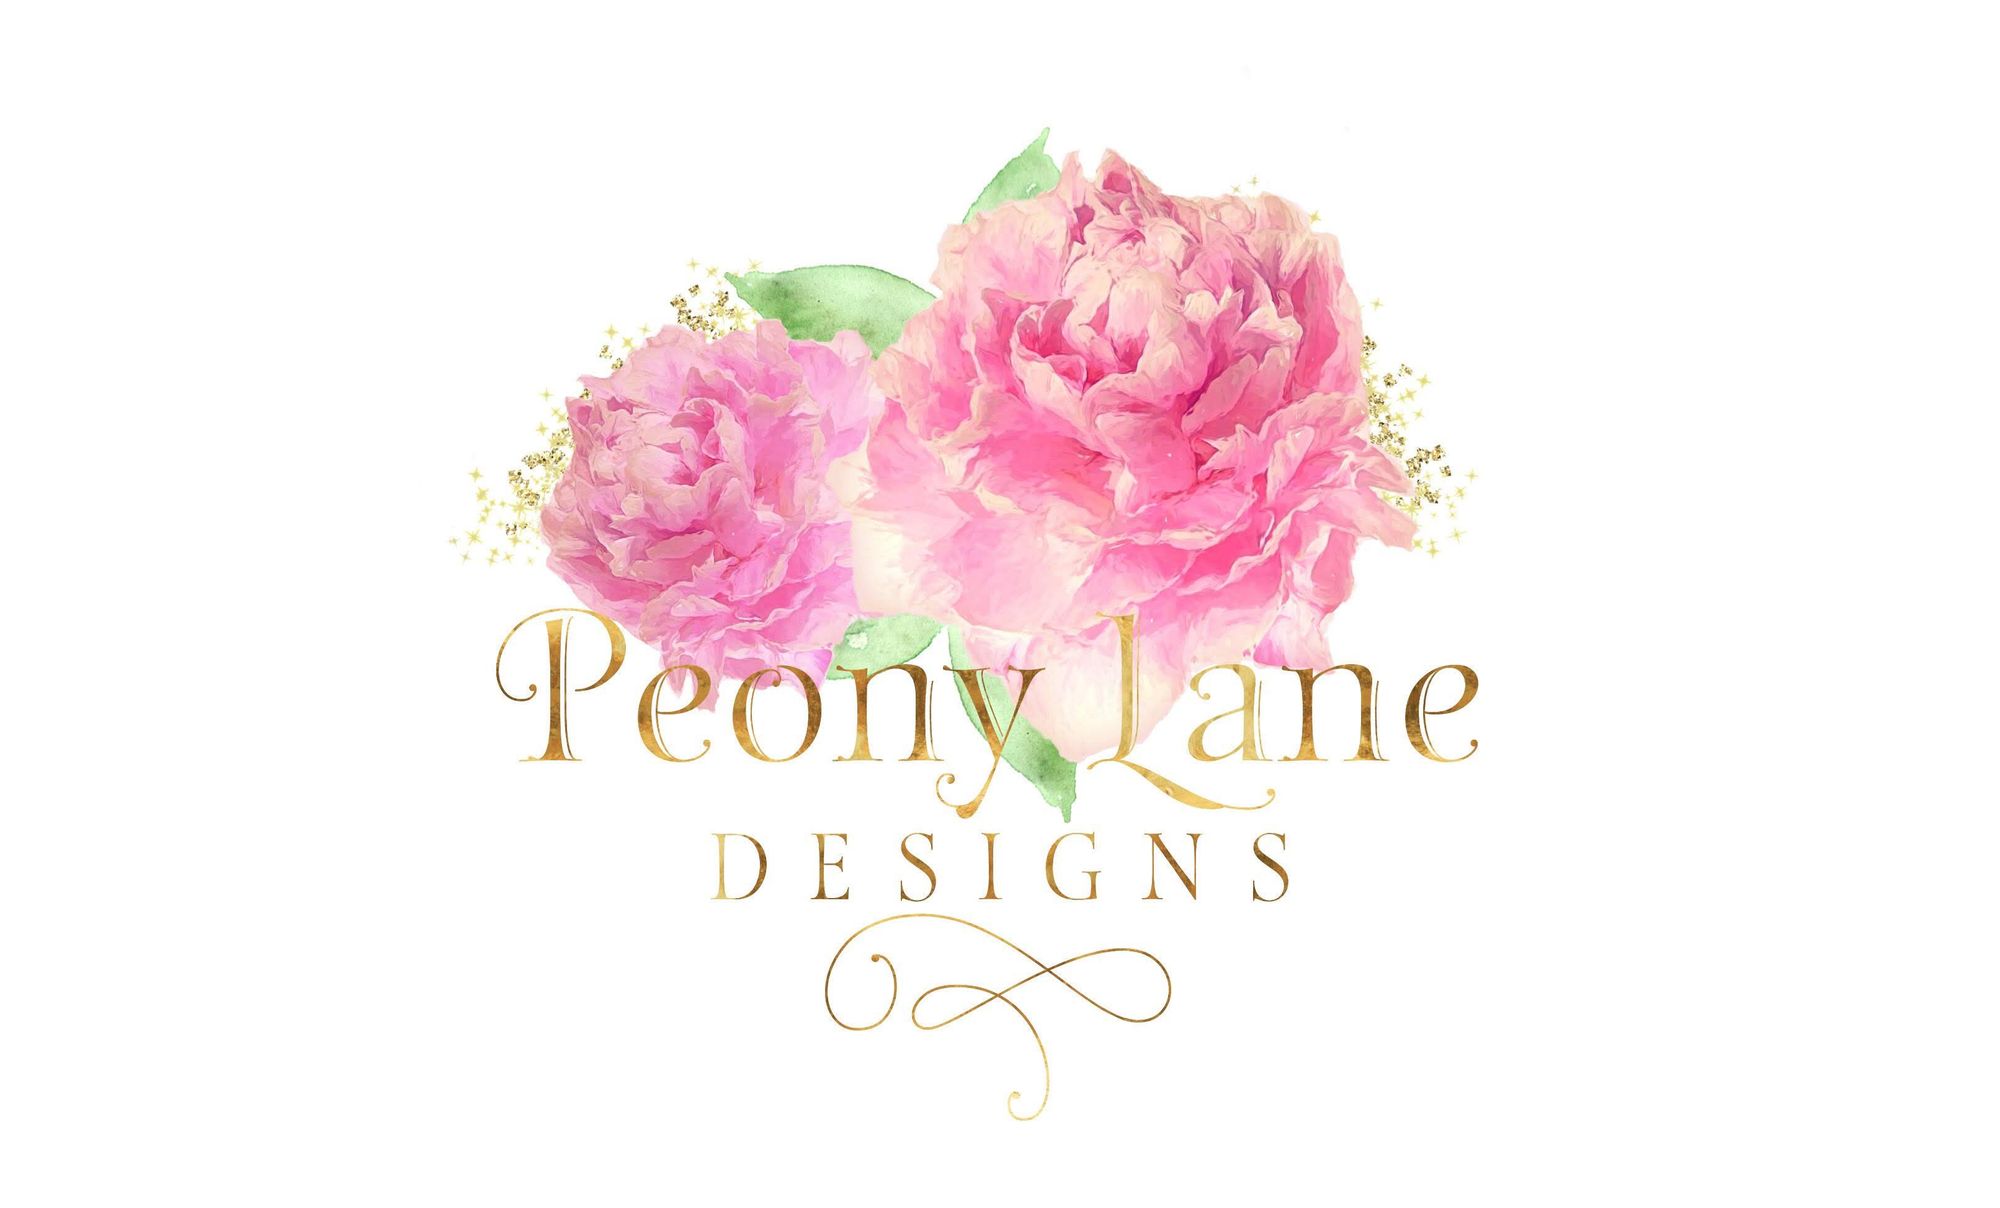 Peony Lane Designs